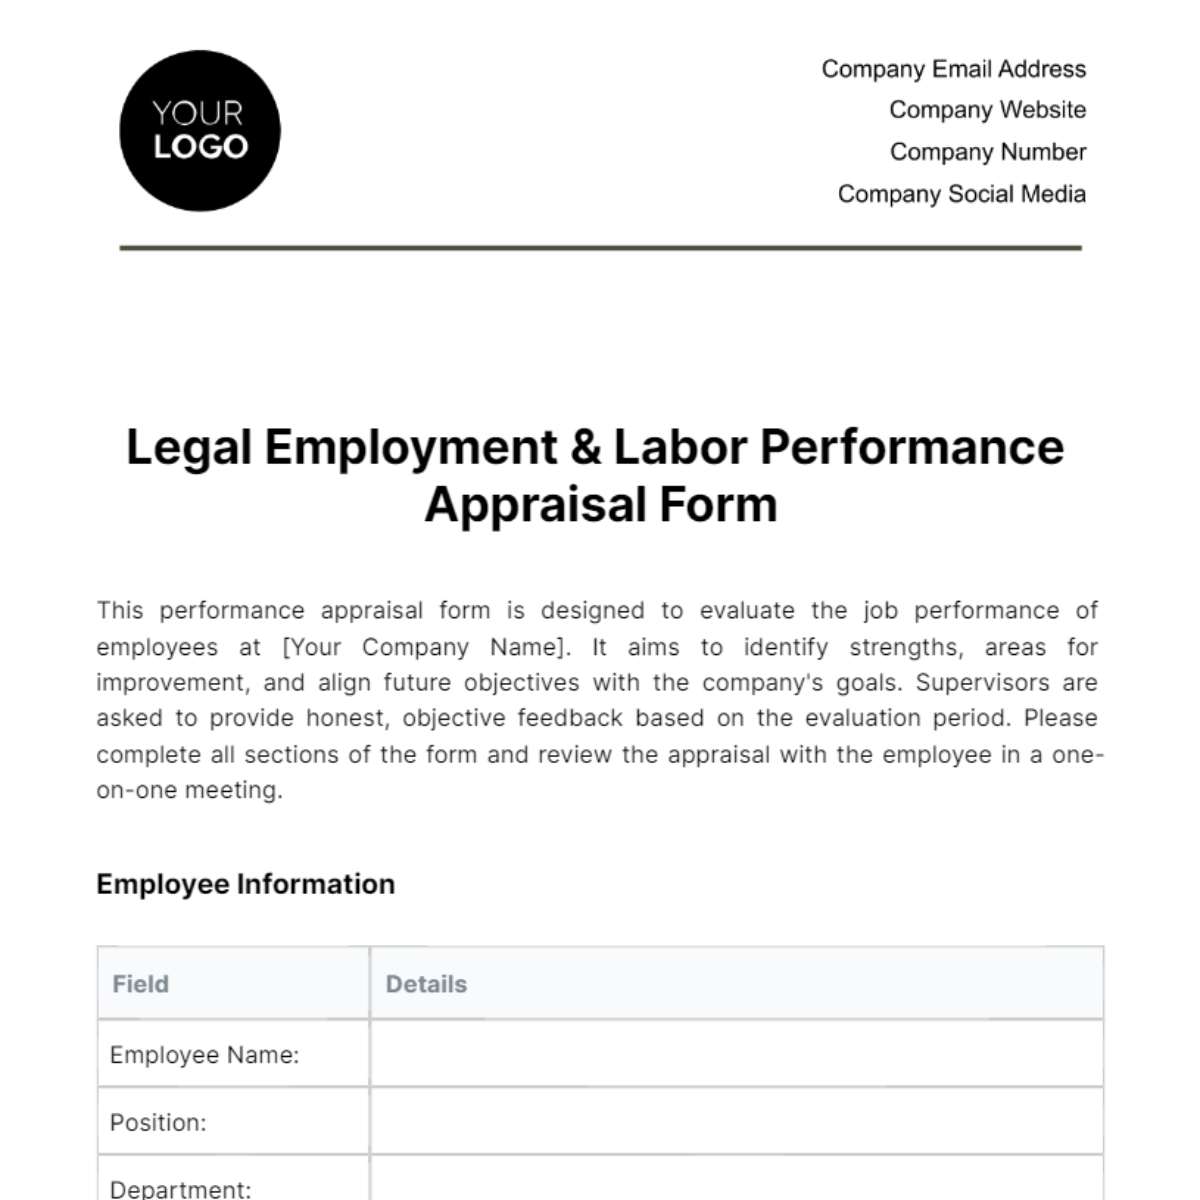 Legal Employment & Labor Performance Appraisal Form Template